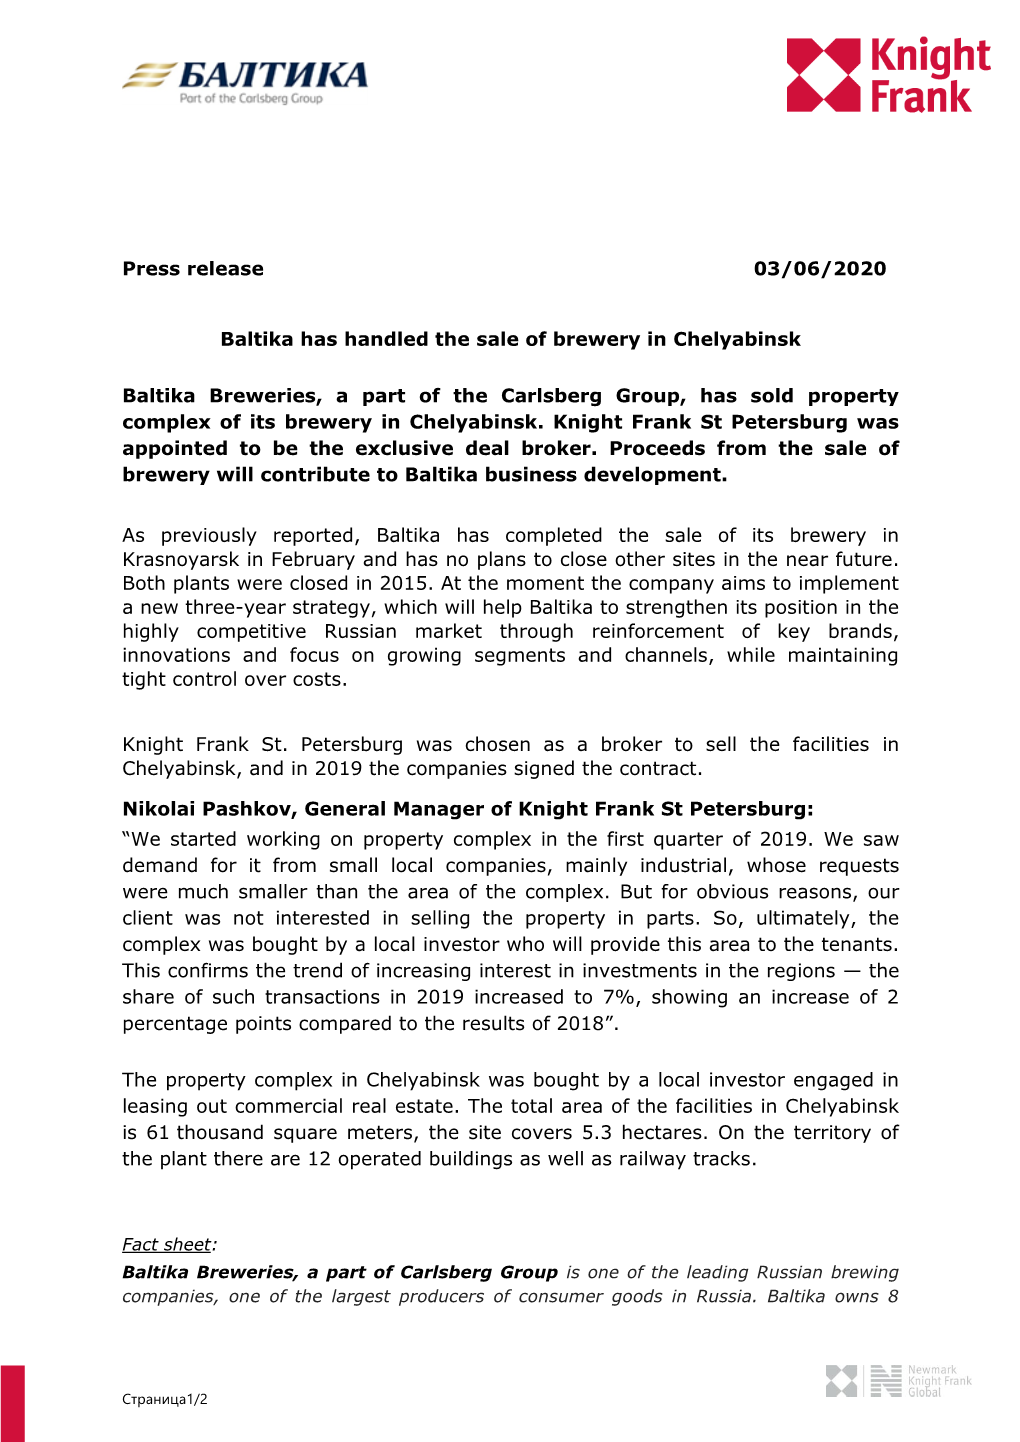 Press Release 03/06/2020 Baltika Has Handled The